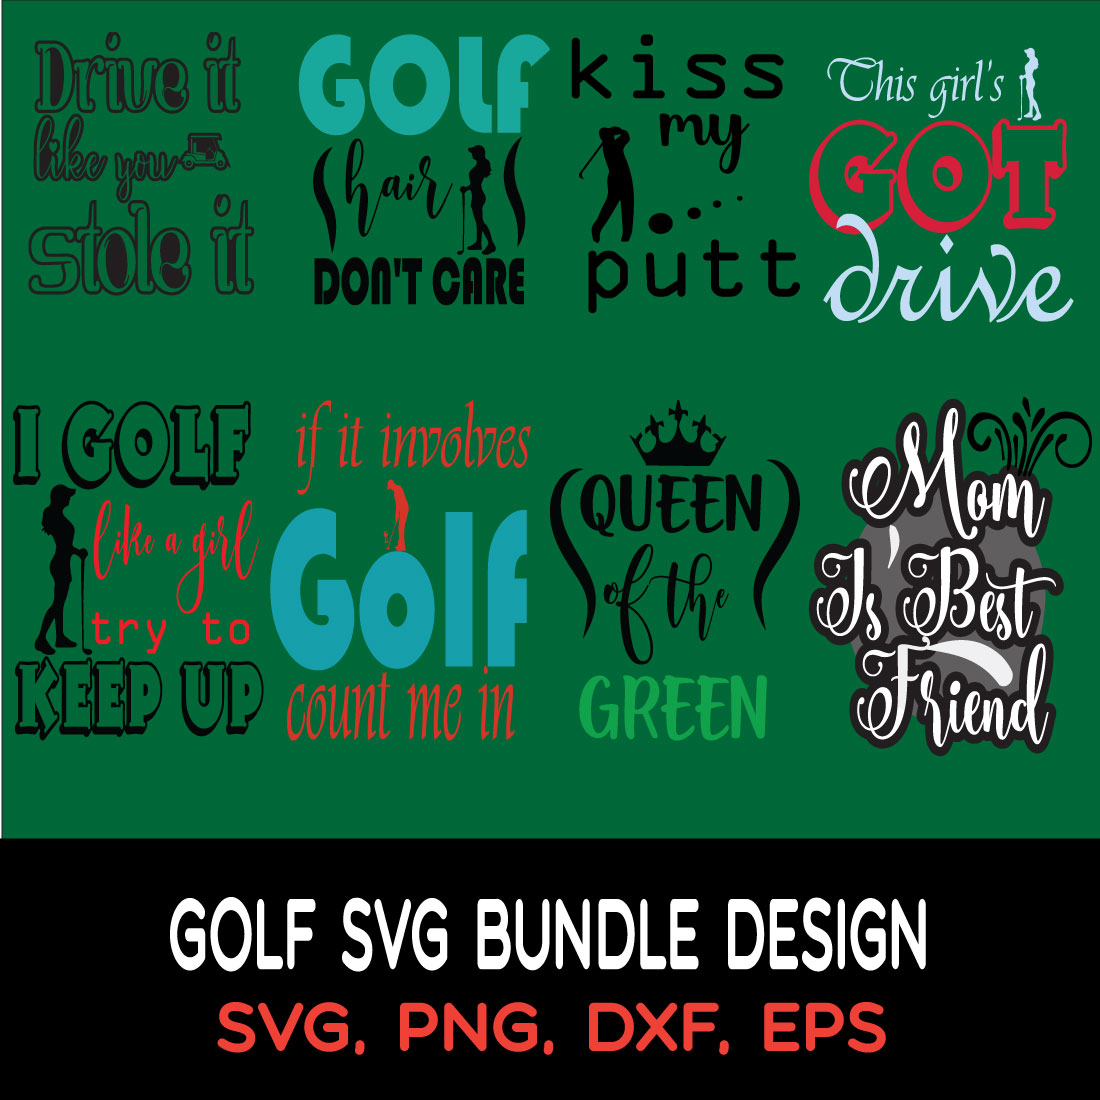 Typography SVG Bundle Design main cover.